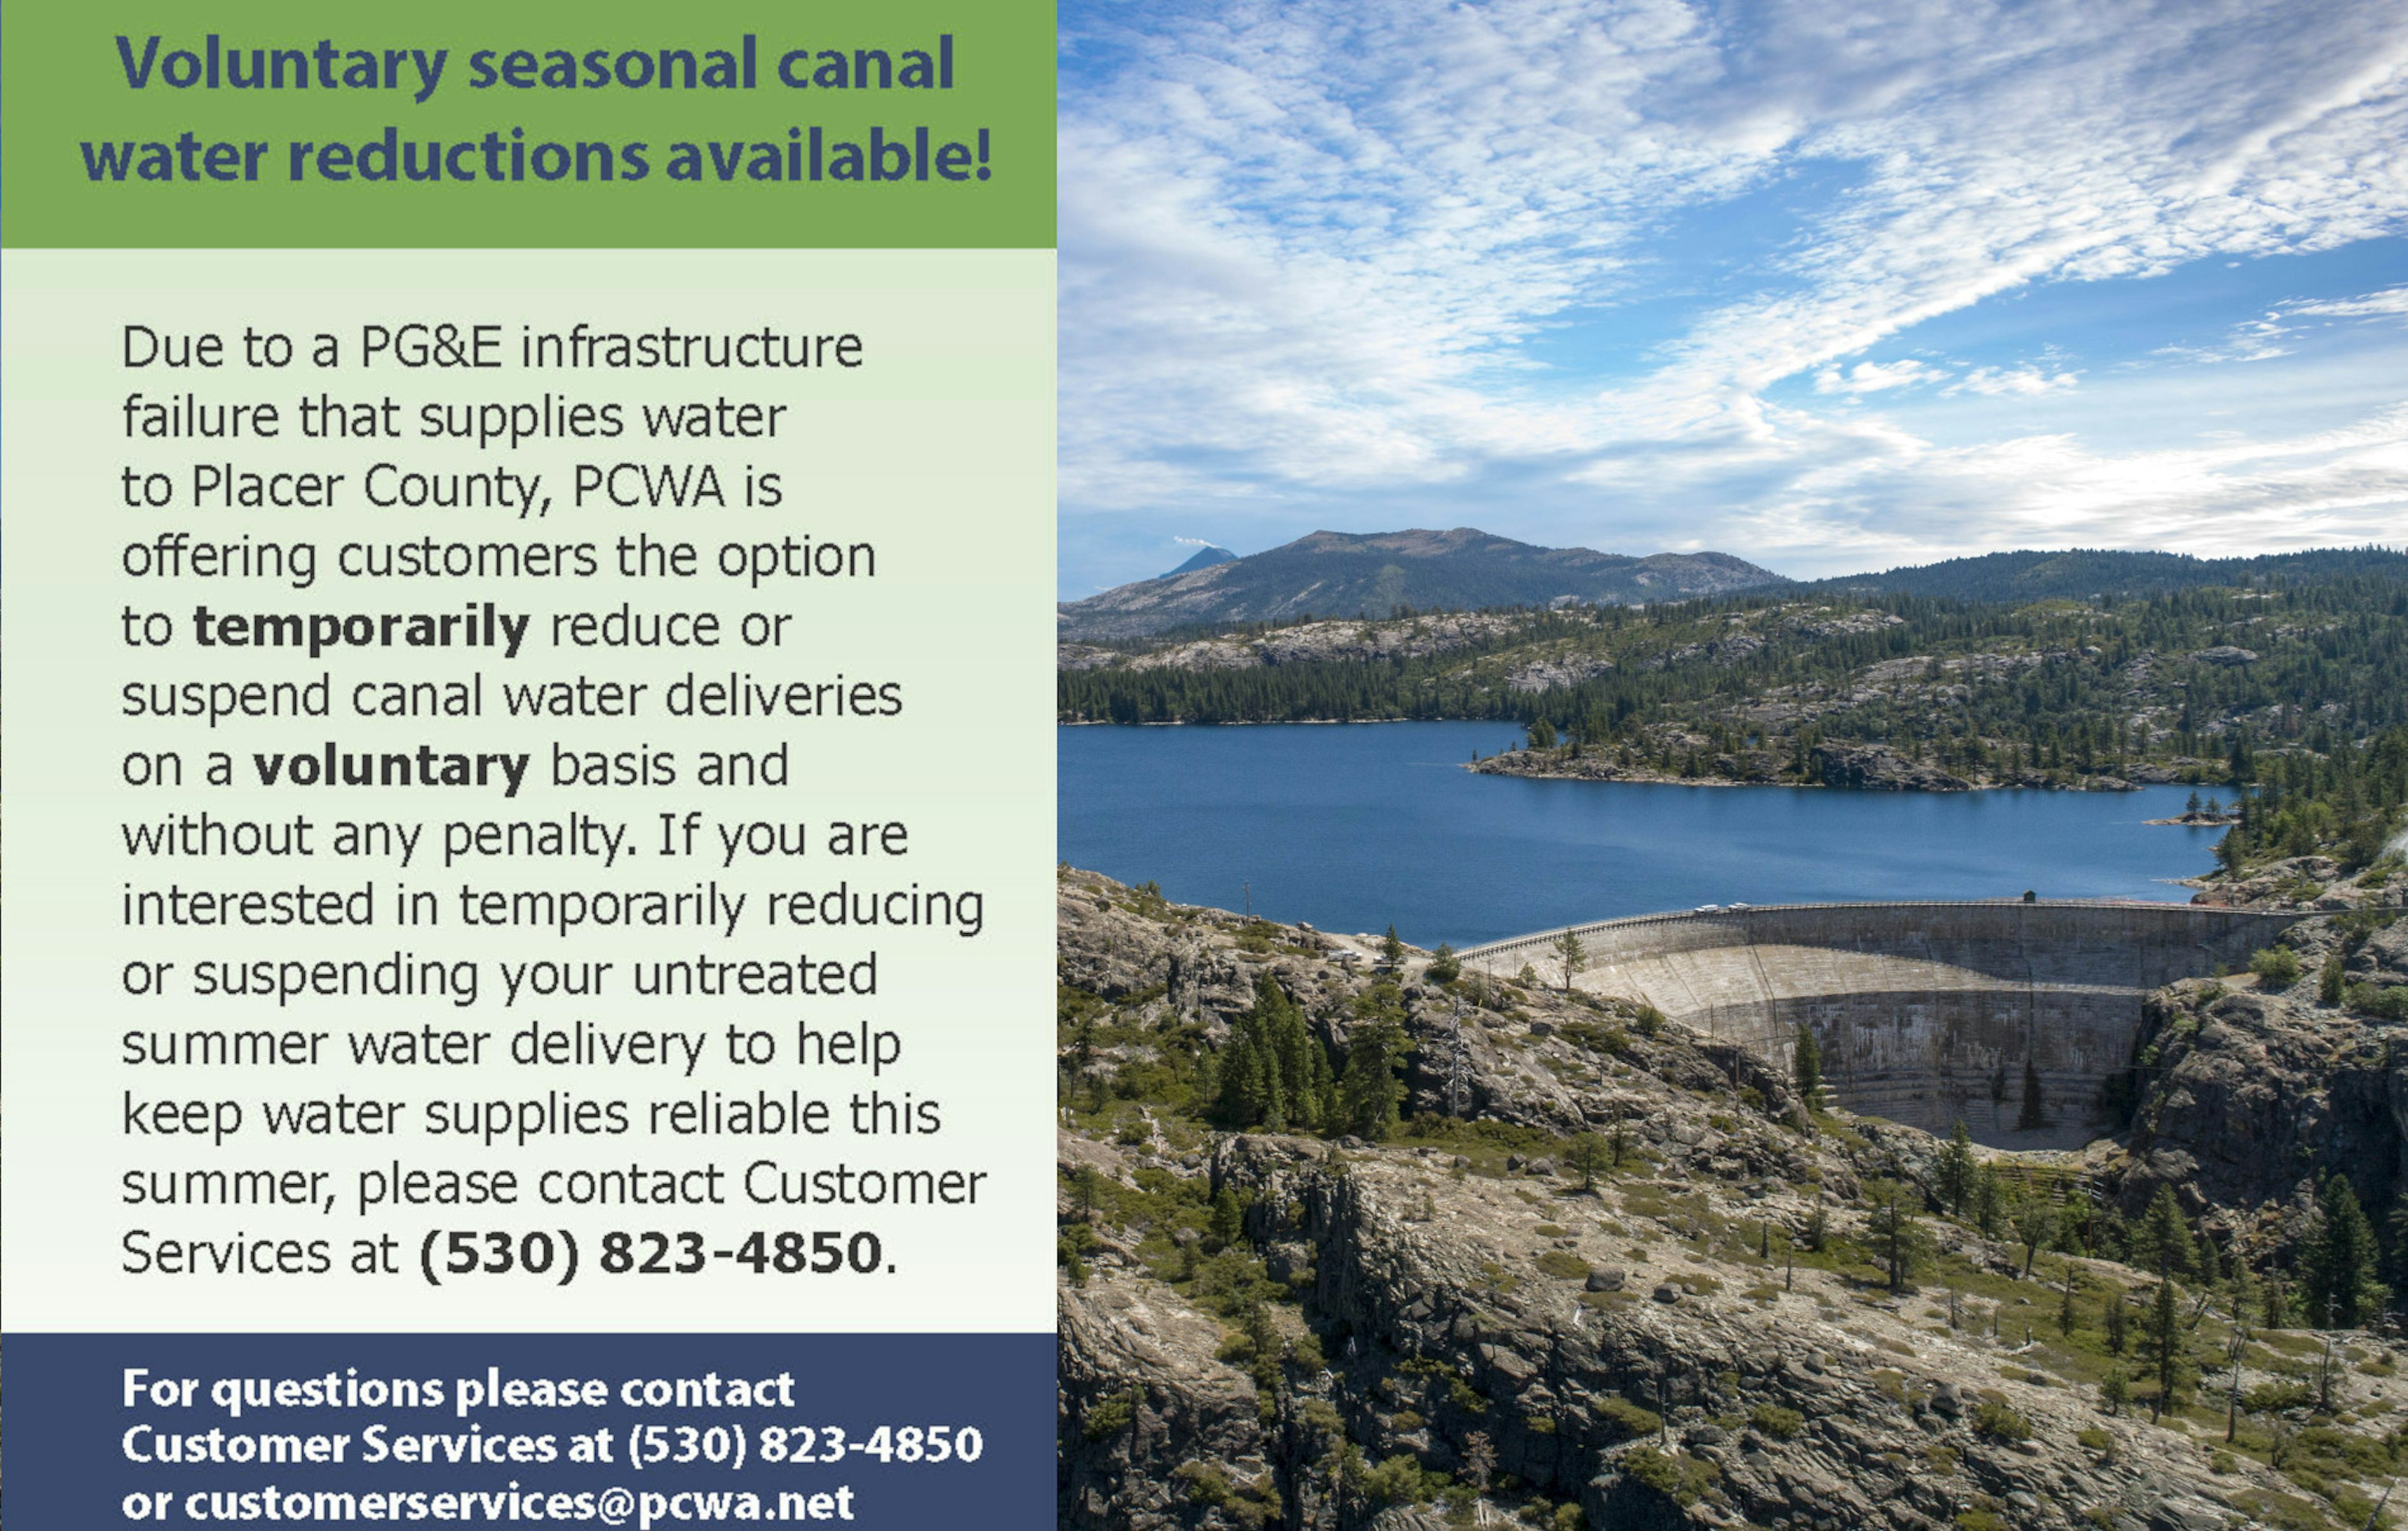 Voluntary Seasonal Canal Water Reductions